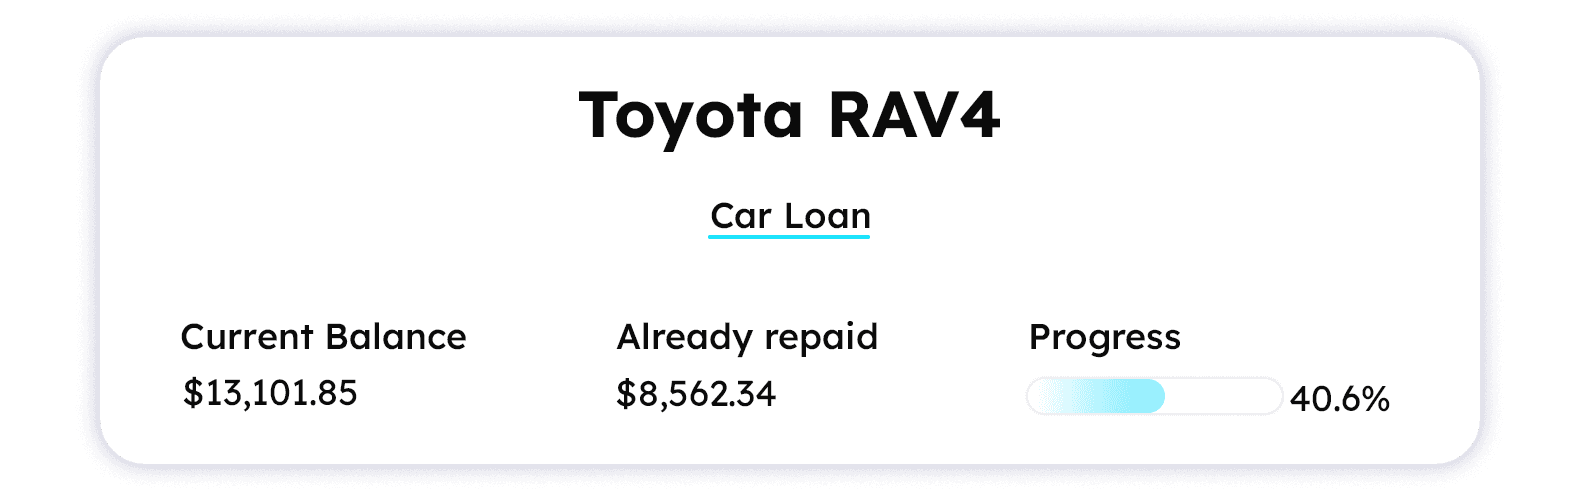 car loan toyota rav4 debt card